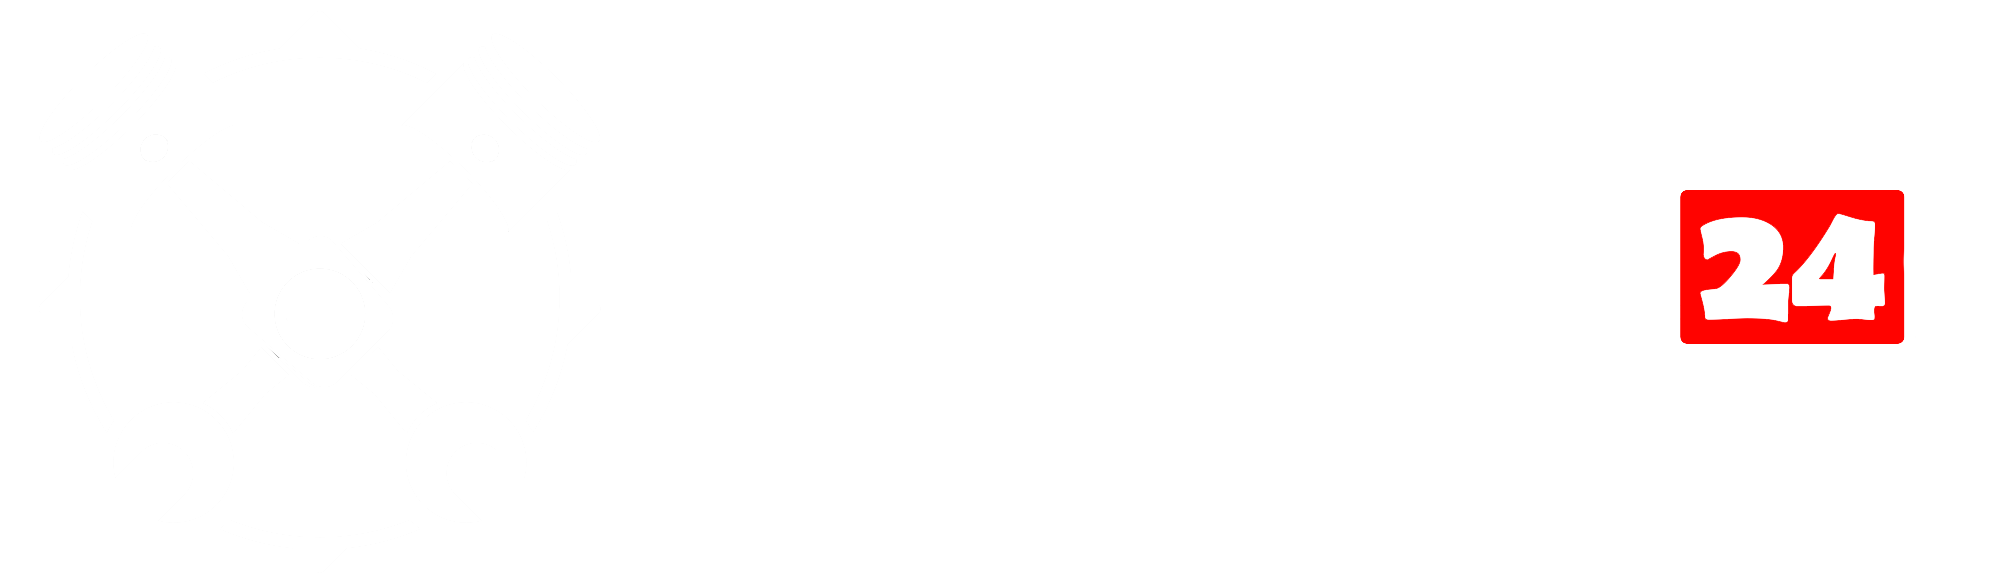 Warsztat24.com